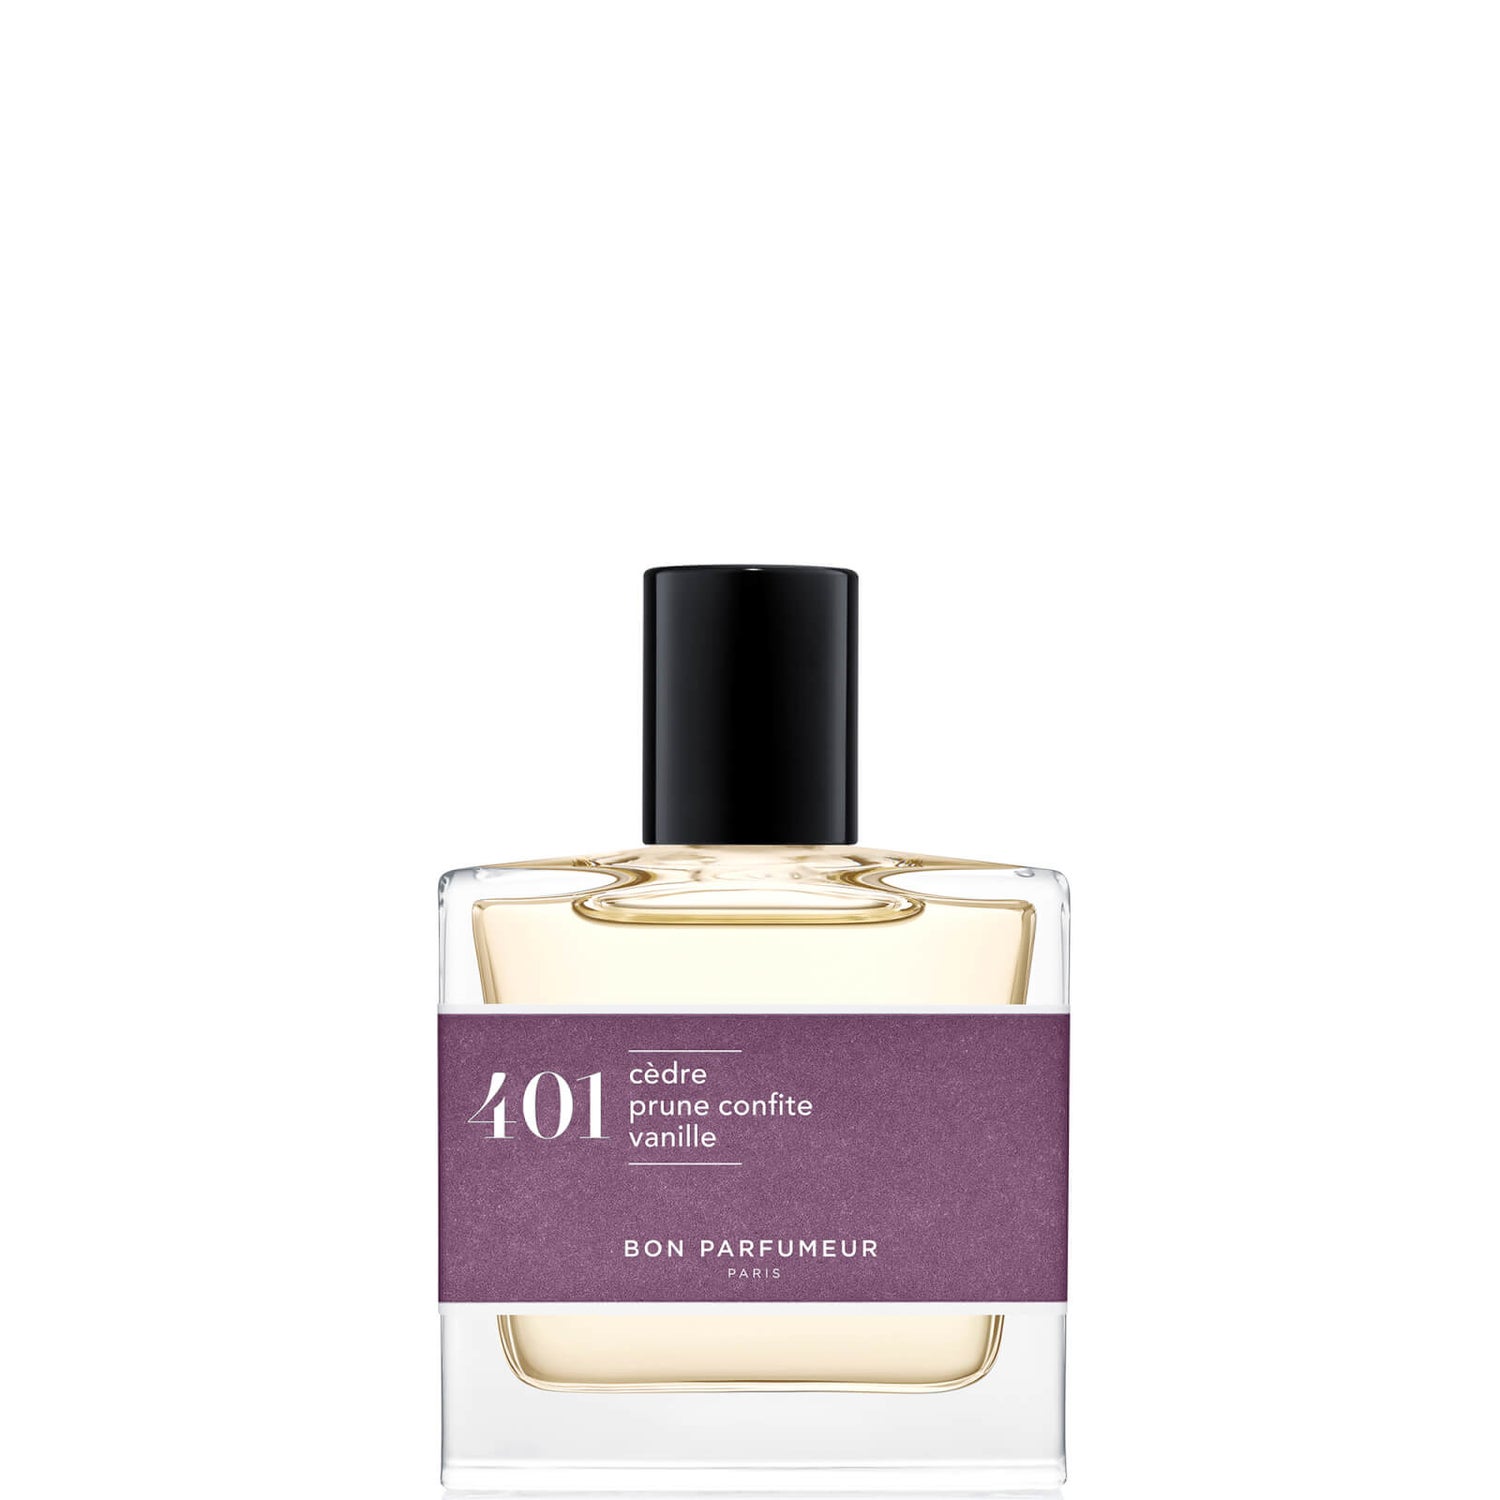 Bon Parfumeur 401 Cedar Gekonfijte Pruim Vanille Eau de Parfum - 30ml